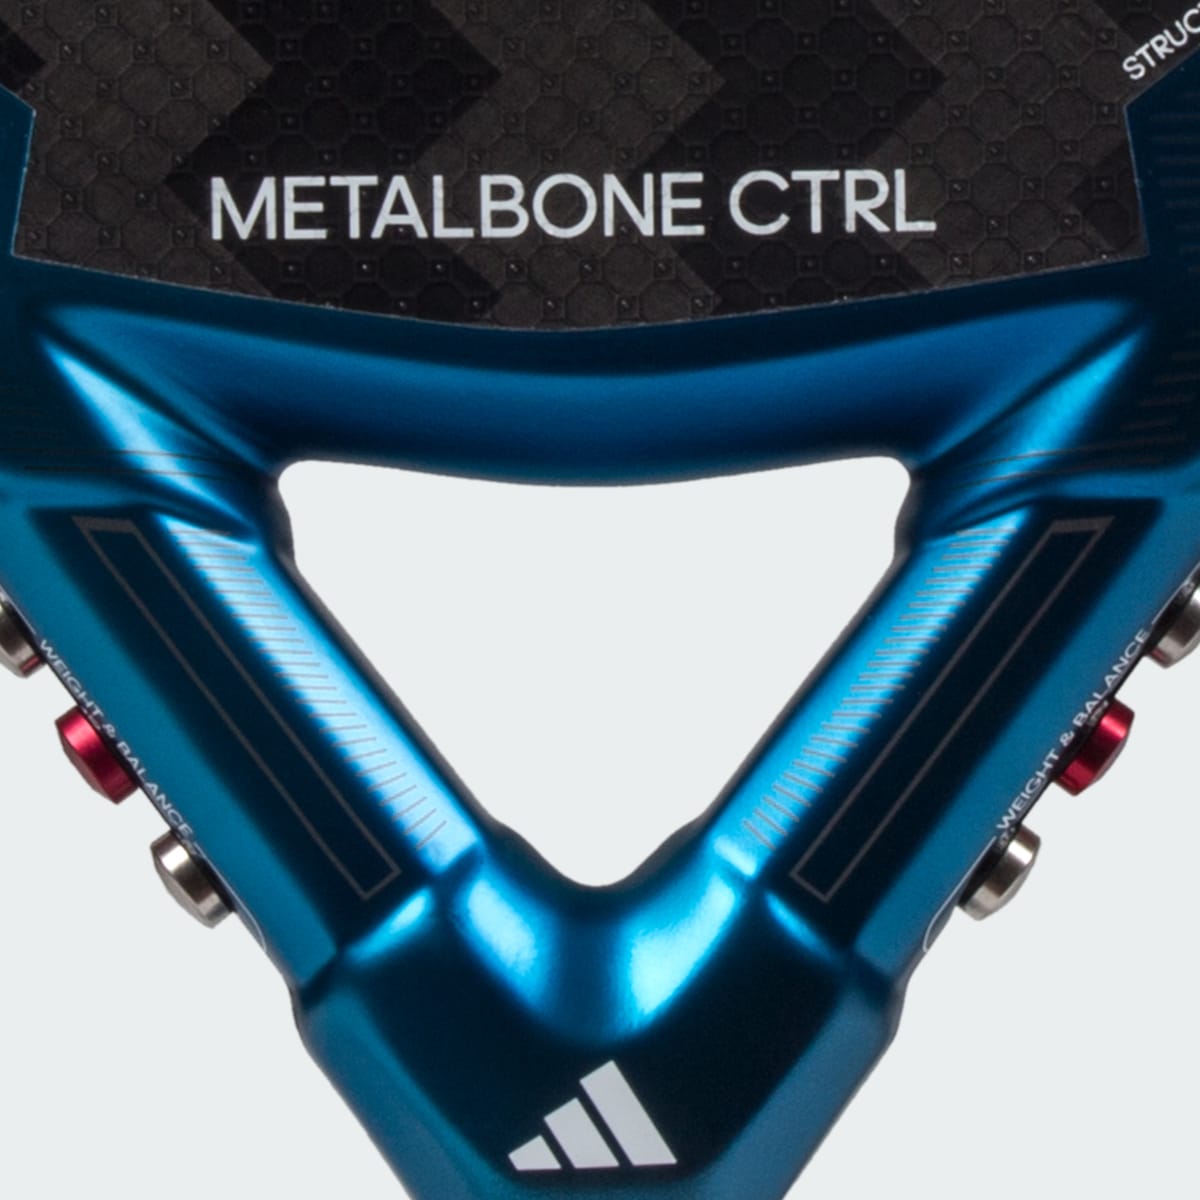 Adidas METALBONE CTRL 3.3. 5